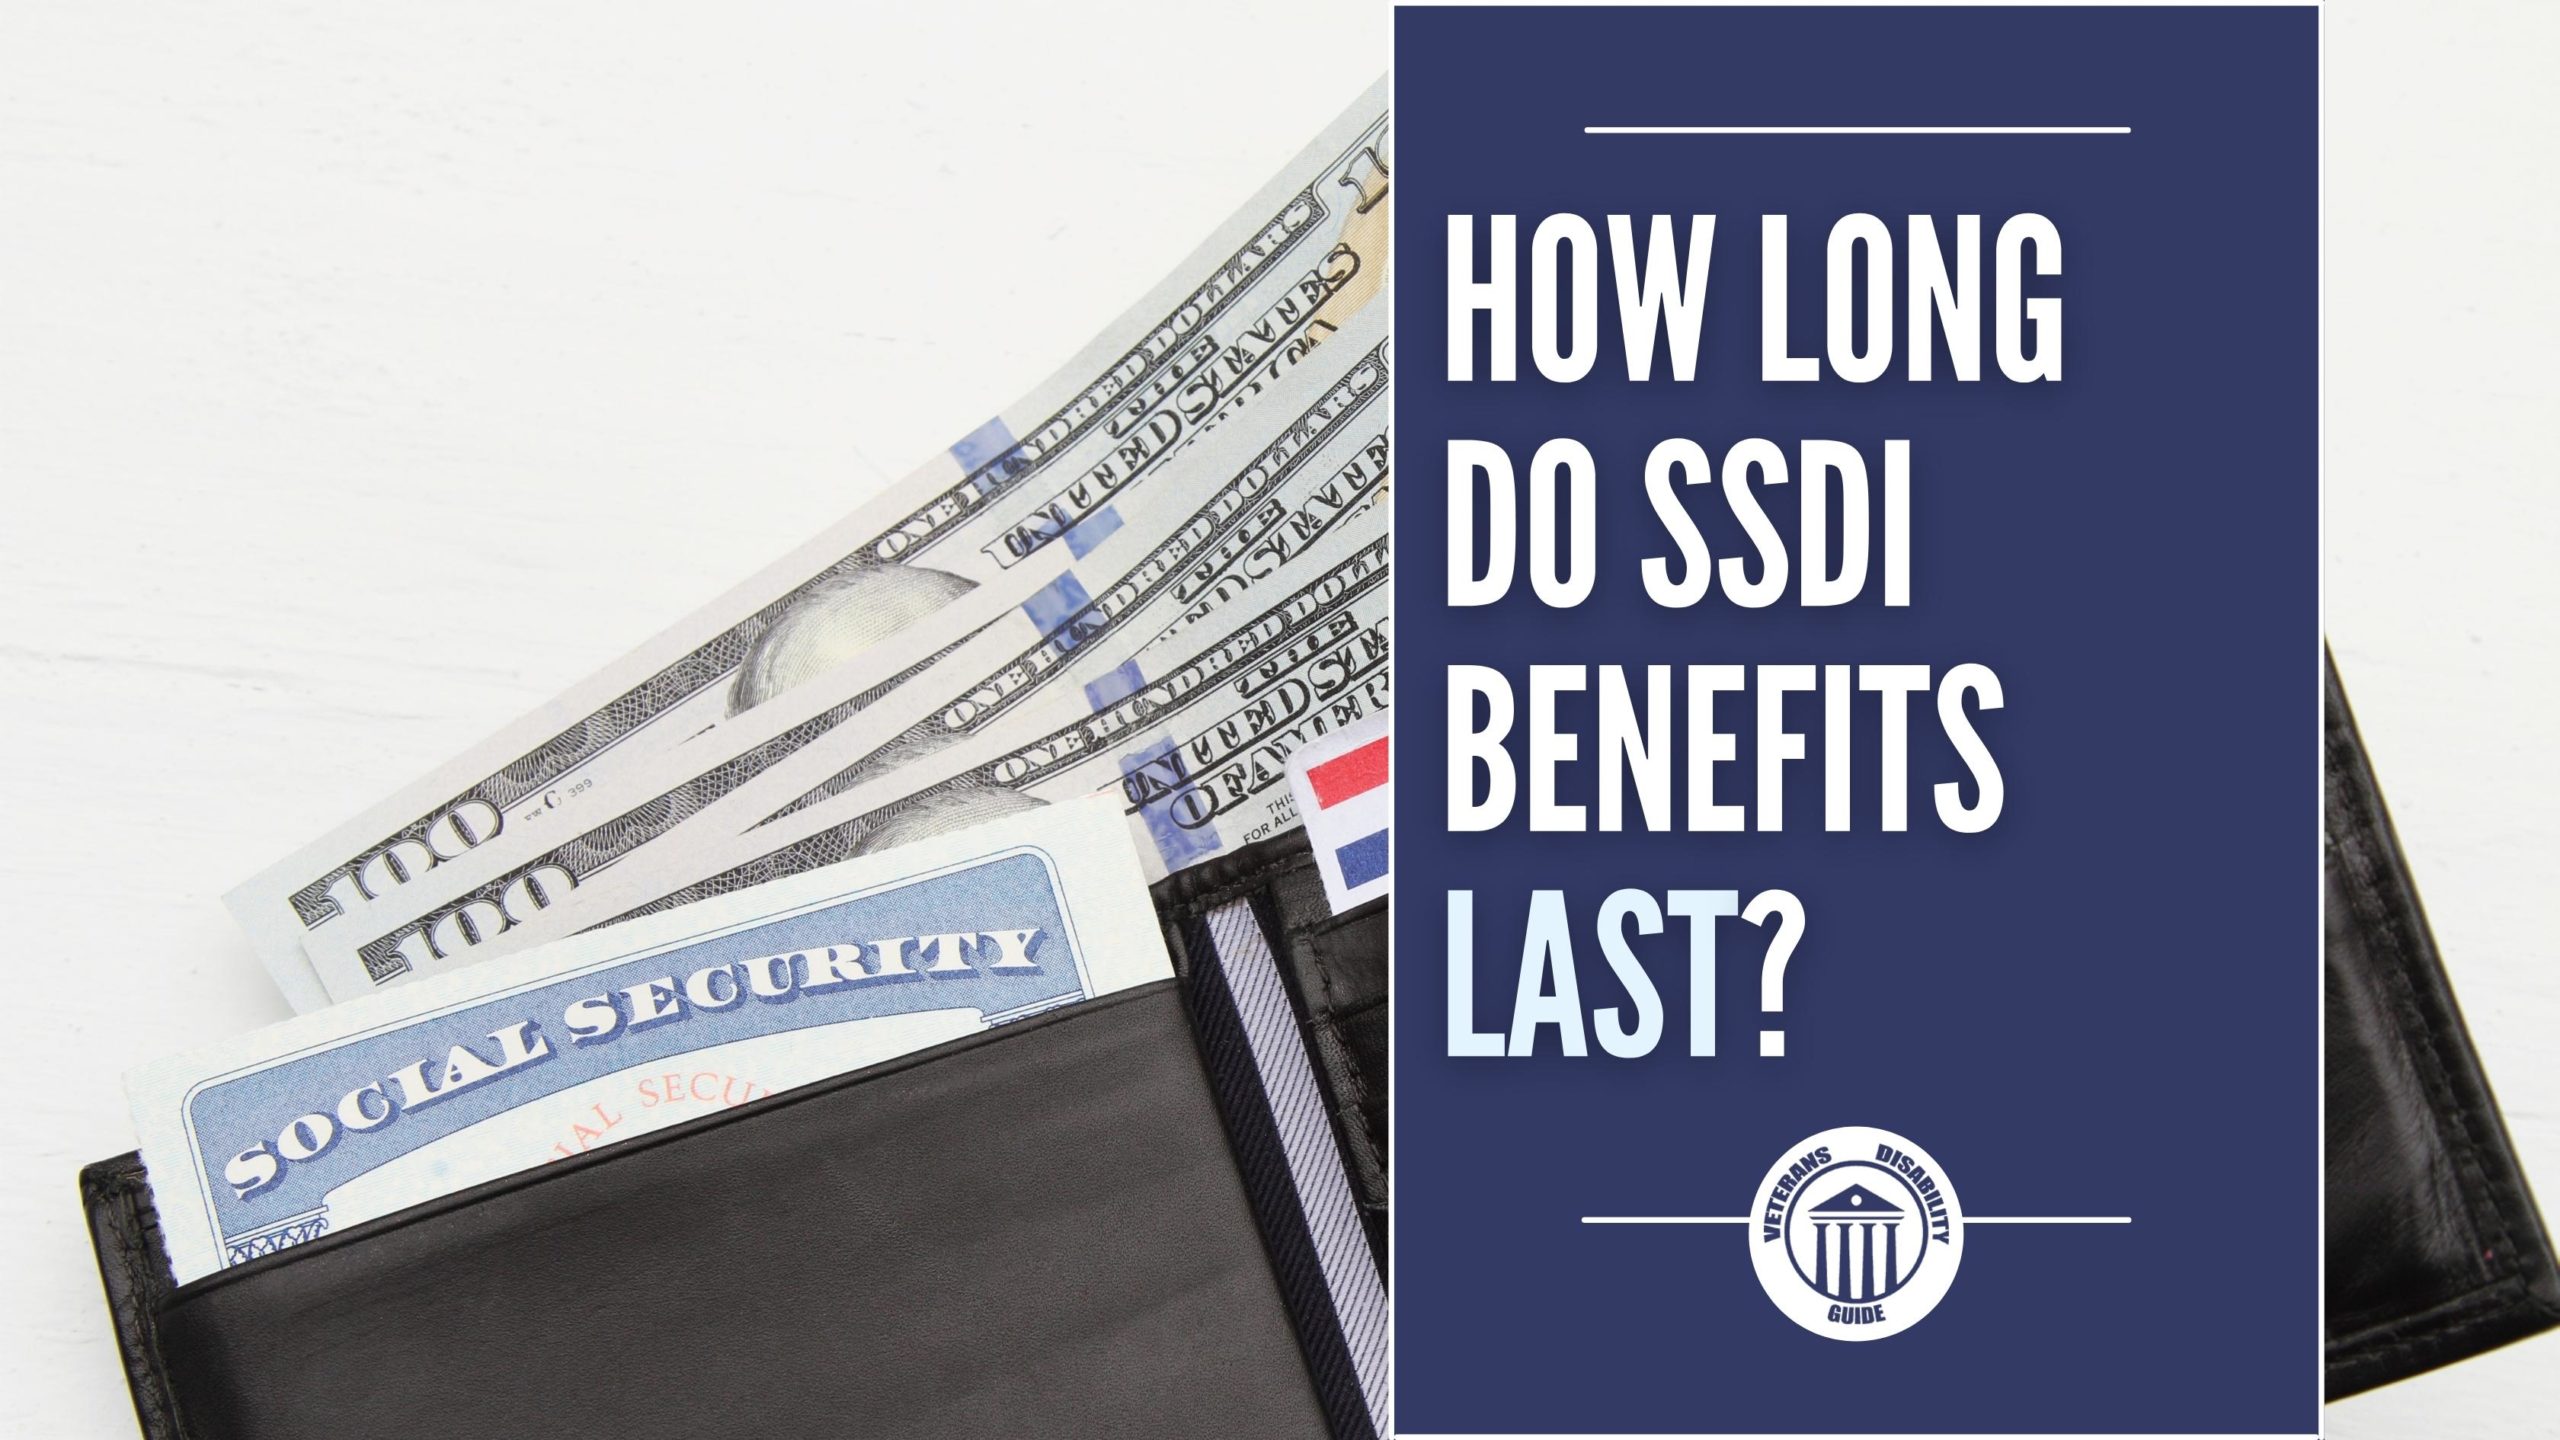 How Long do SSDI Benefits Last? blog header image